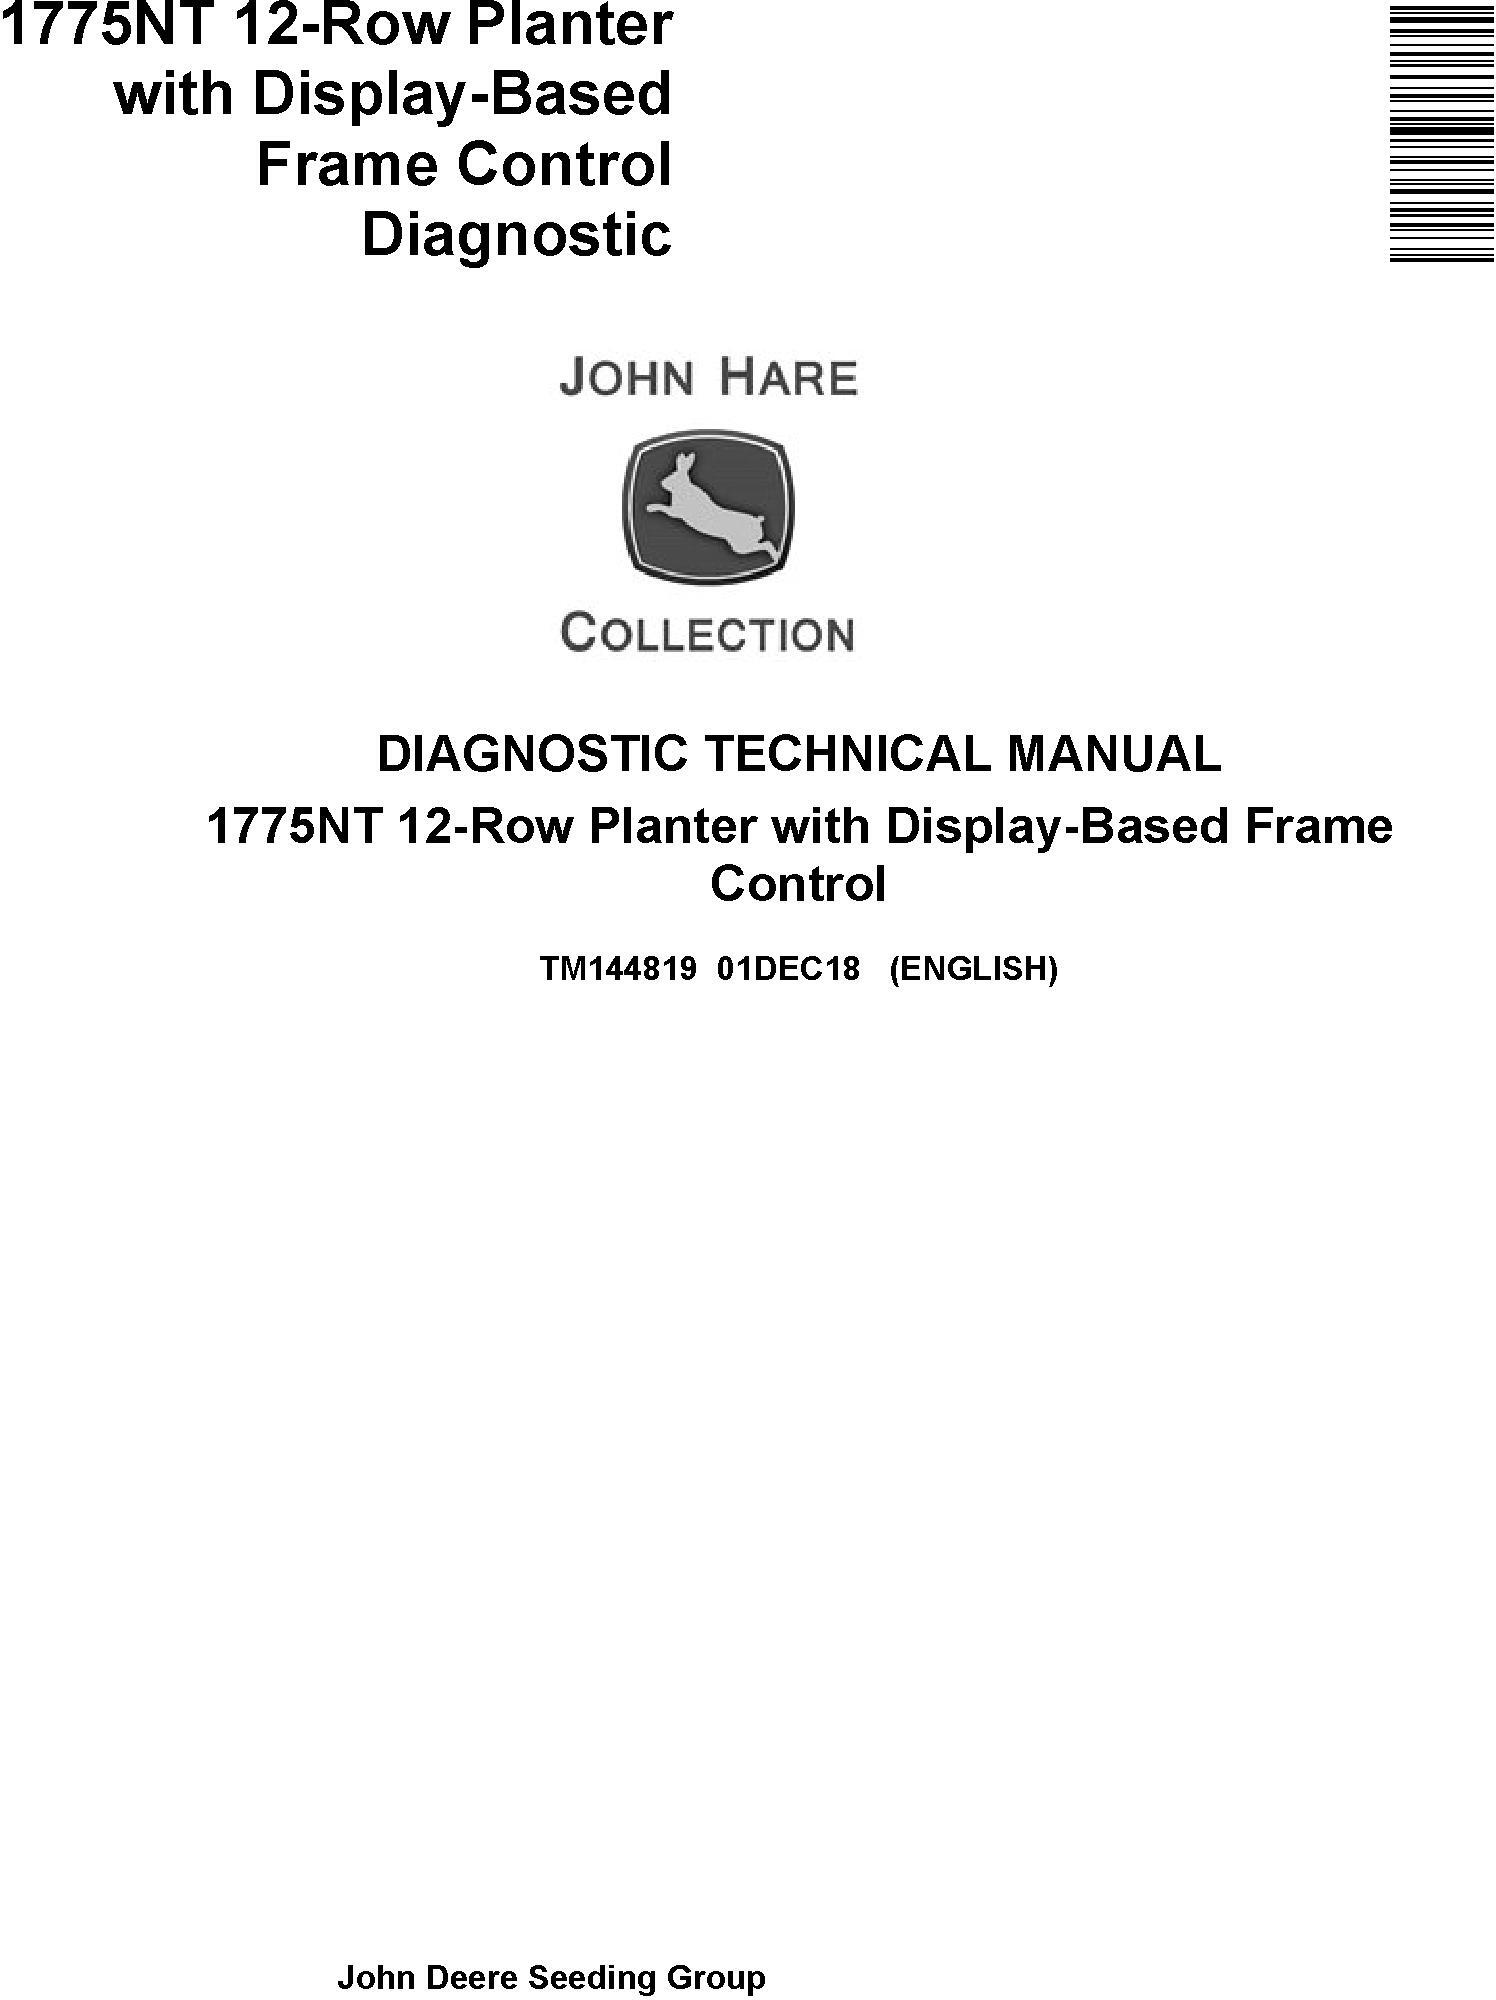 John Deere 1775NT 12-Row Planter Diagnostic Technical Manual TM144819